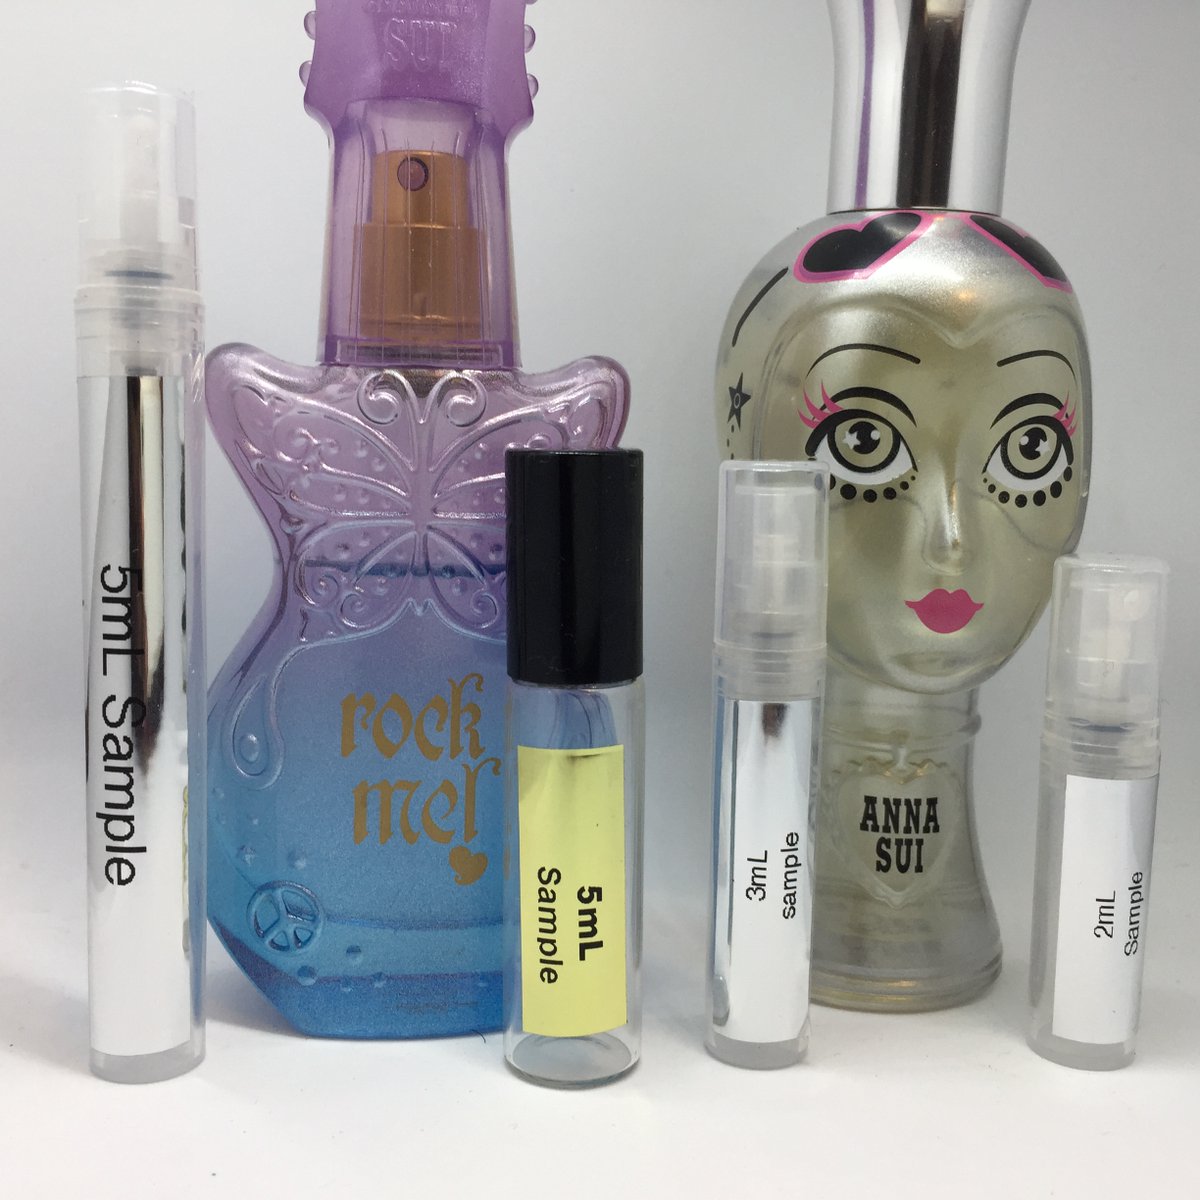 Check out what I’m selling on #Mercari! 2pc ANNA SUI EDT Mini Spray/Roll-On Set ow.ly/Iez950xPR6S #AnnaSui #Fragrance #MercariSeller #decant #Decantshop #fragrancecommunity #igstore #perfume #eaudeparfum #eaudetoilette #fragrancereviewer #scent #scentbird #scentbox